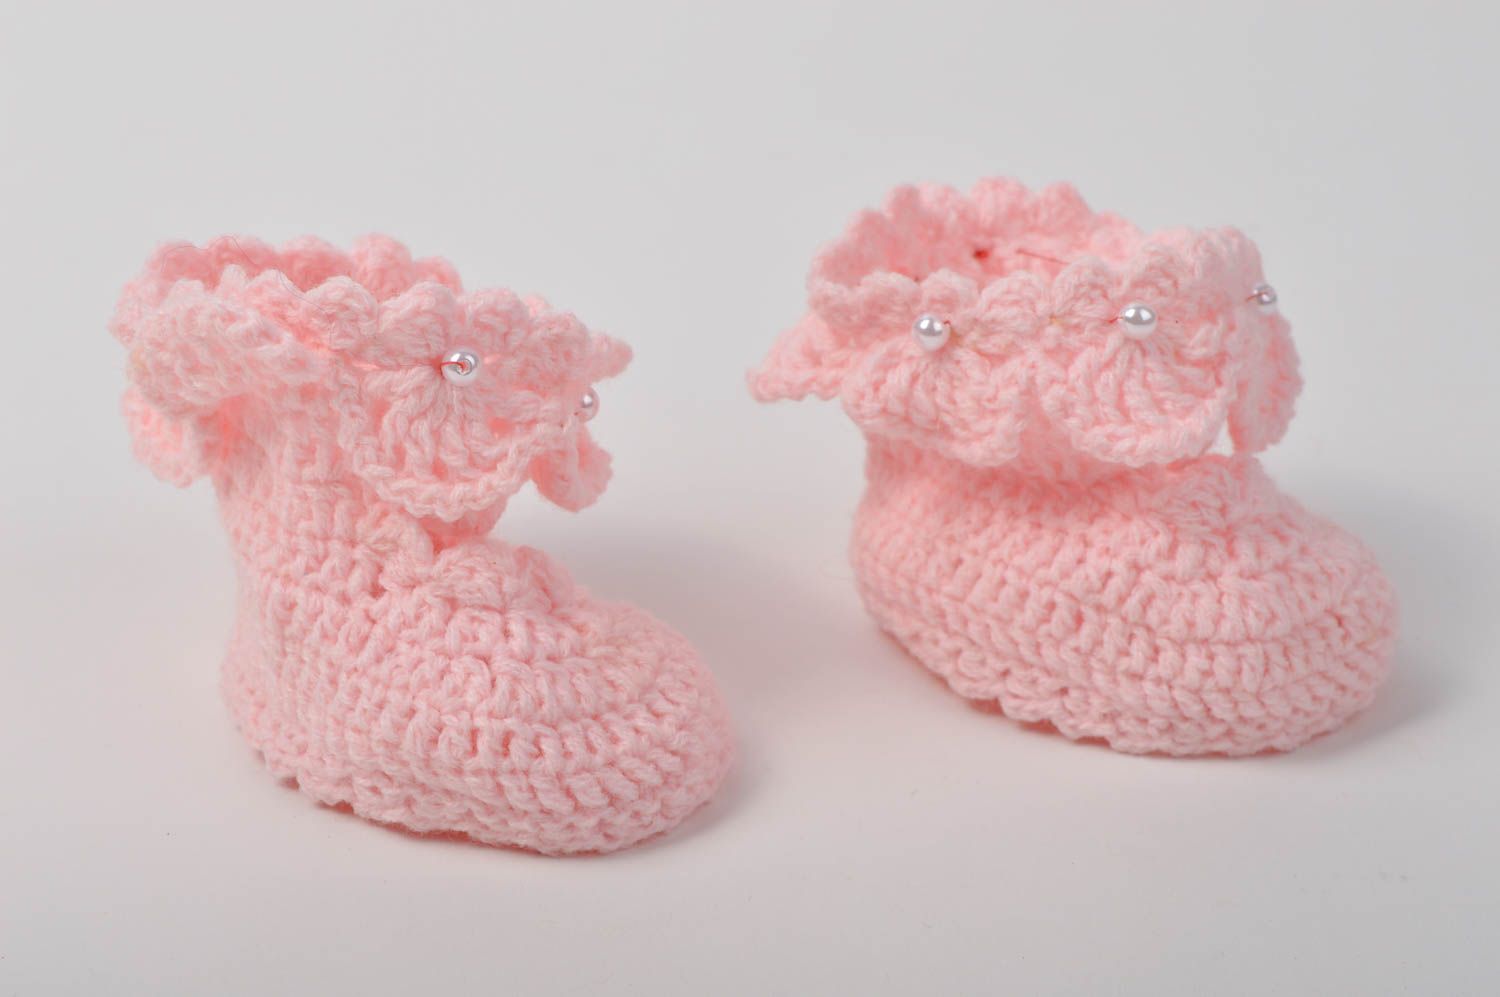 Crocheted booties for babies knitted socks crochet booties handmade booties photo 2